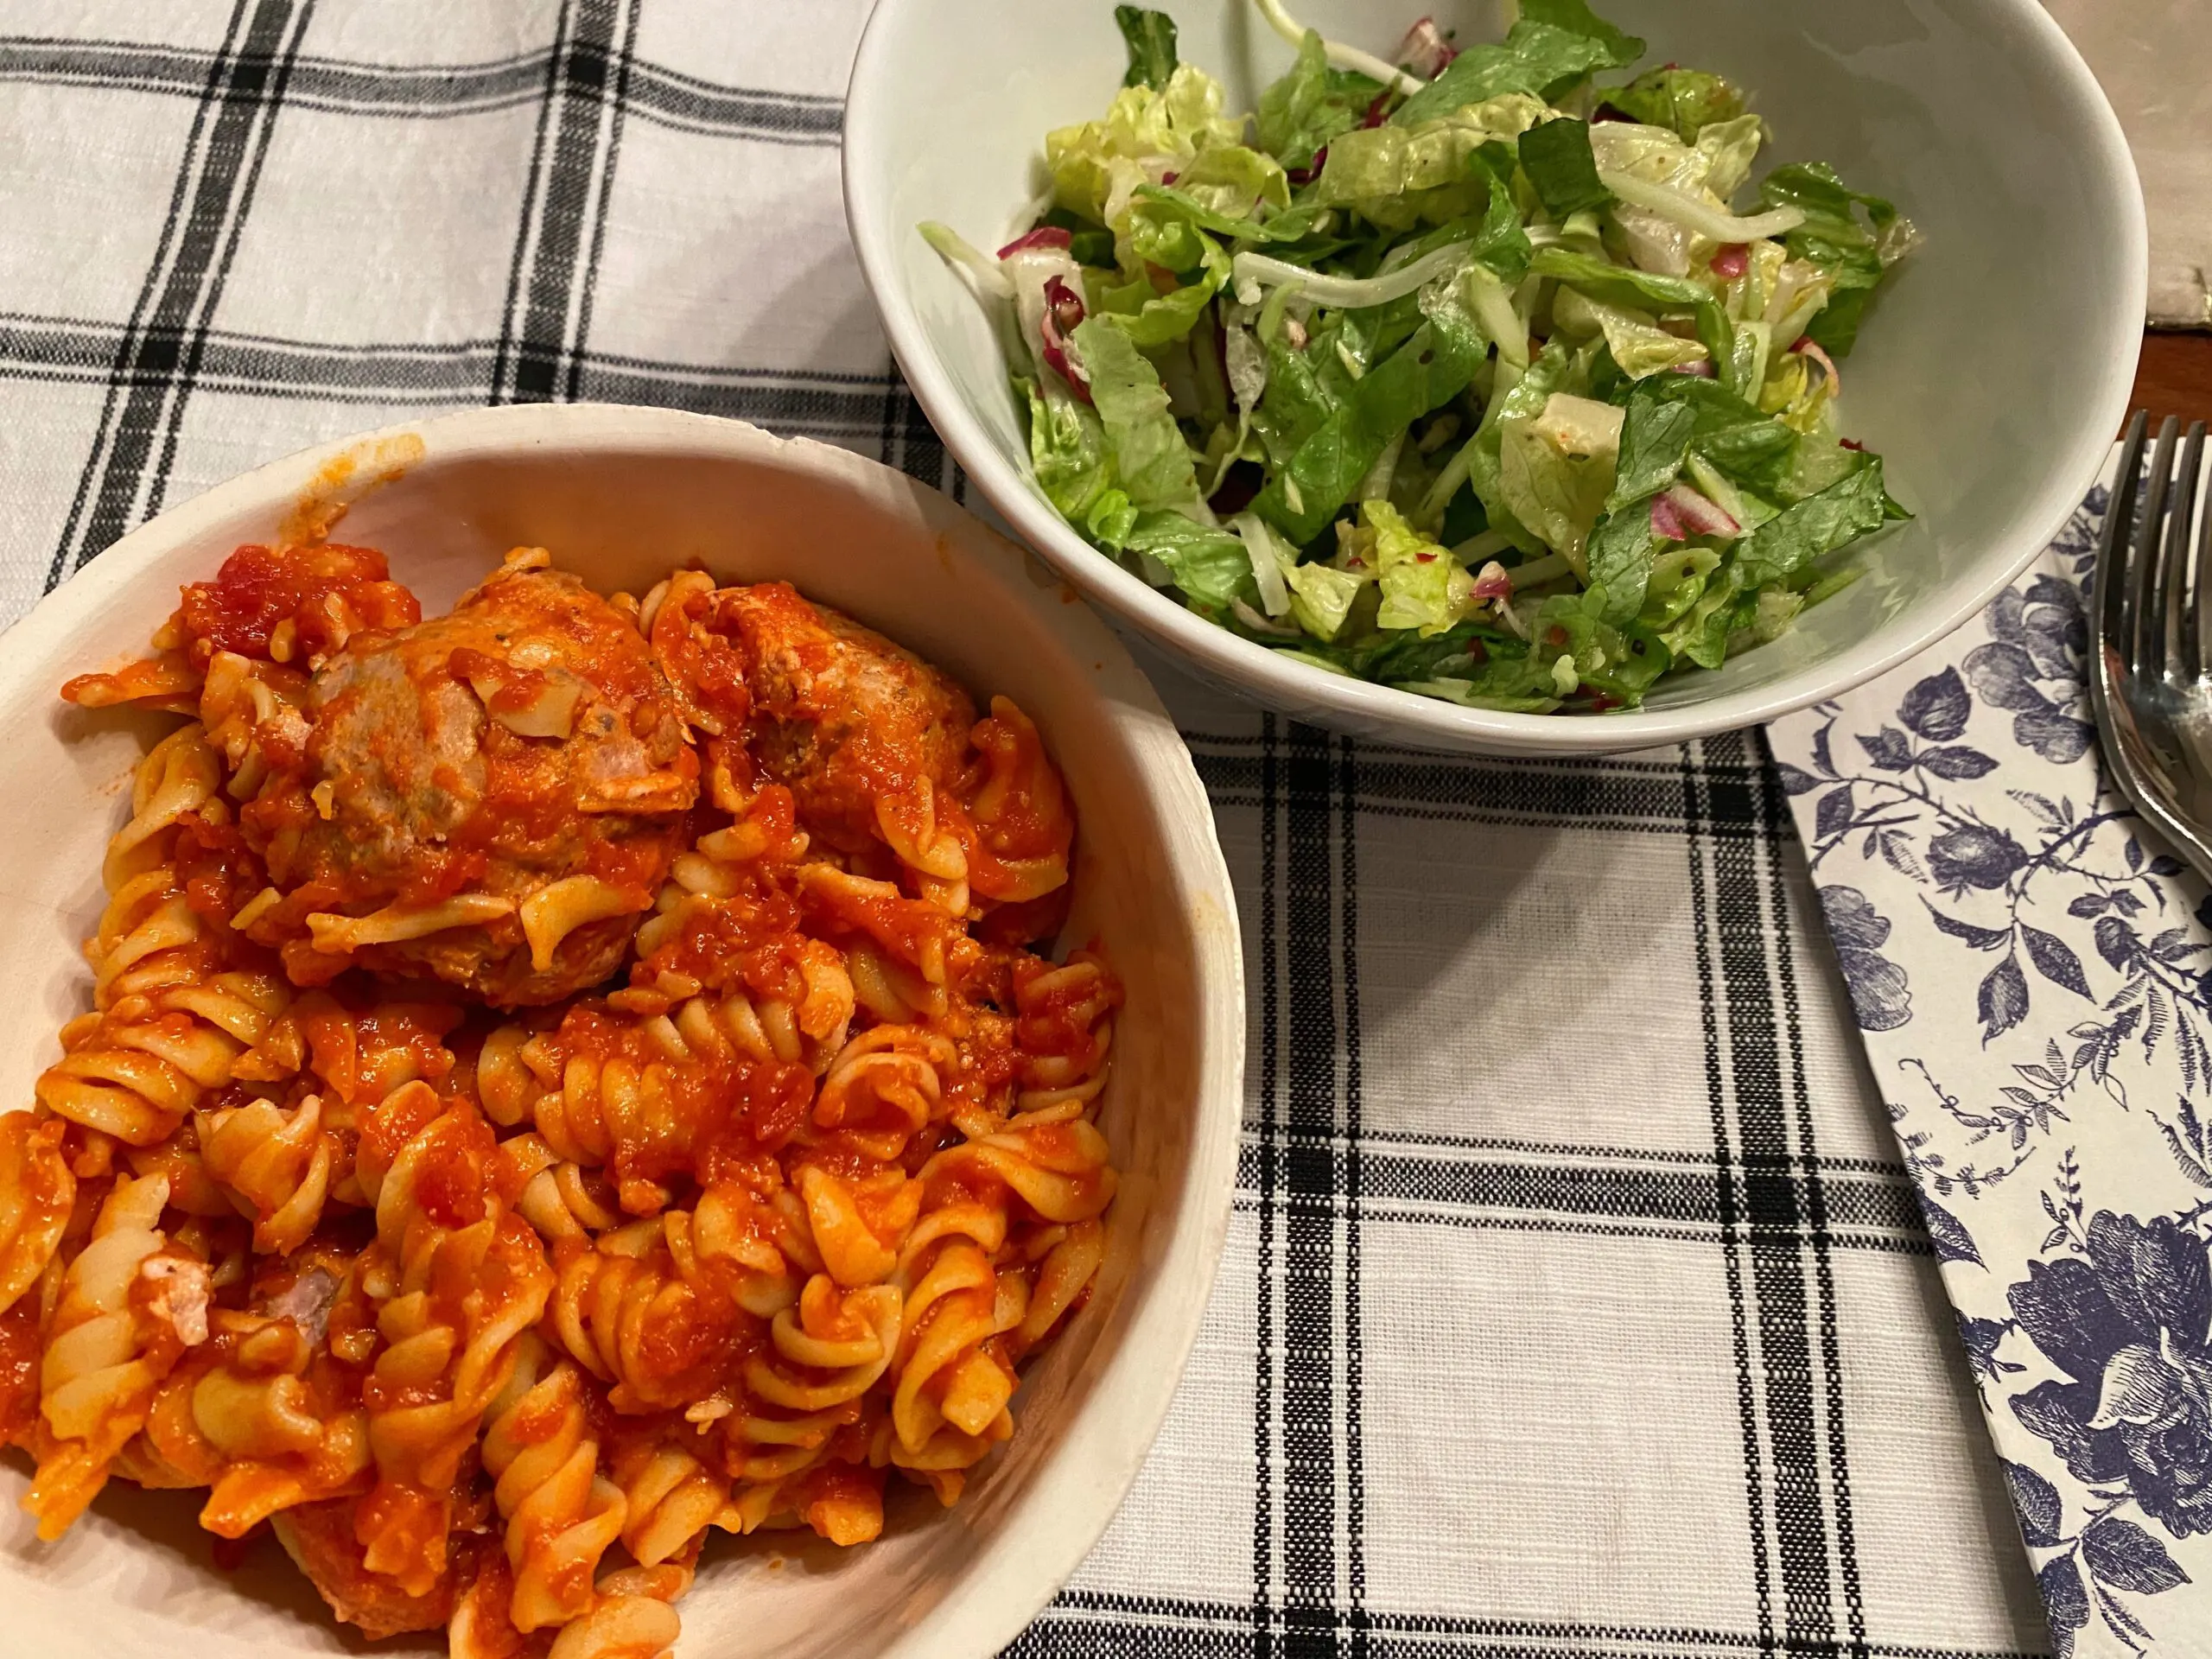 Banza pasta and Mediterranean salad